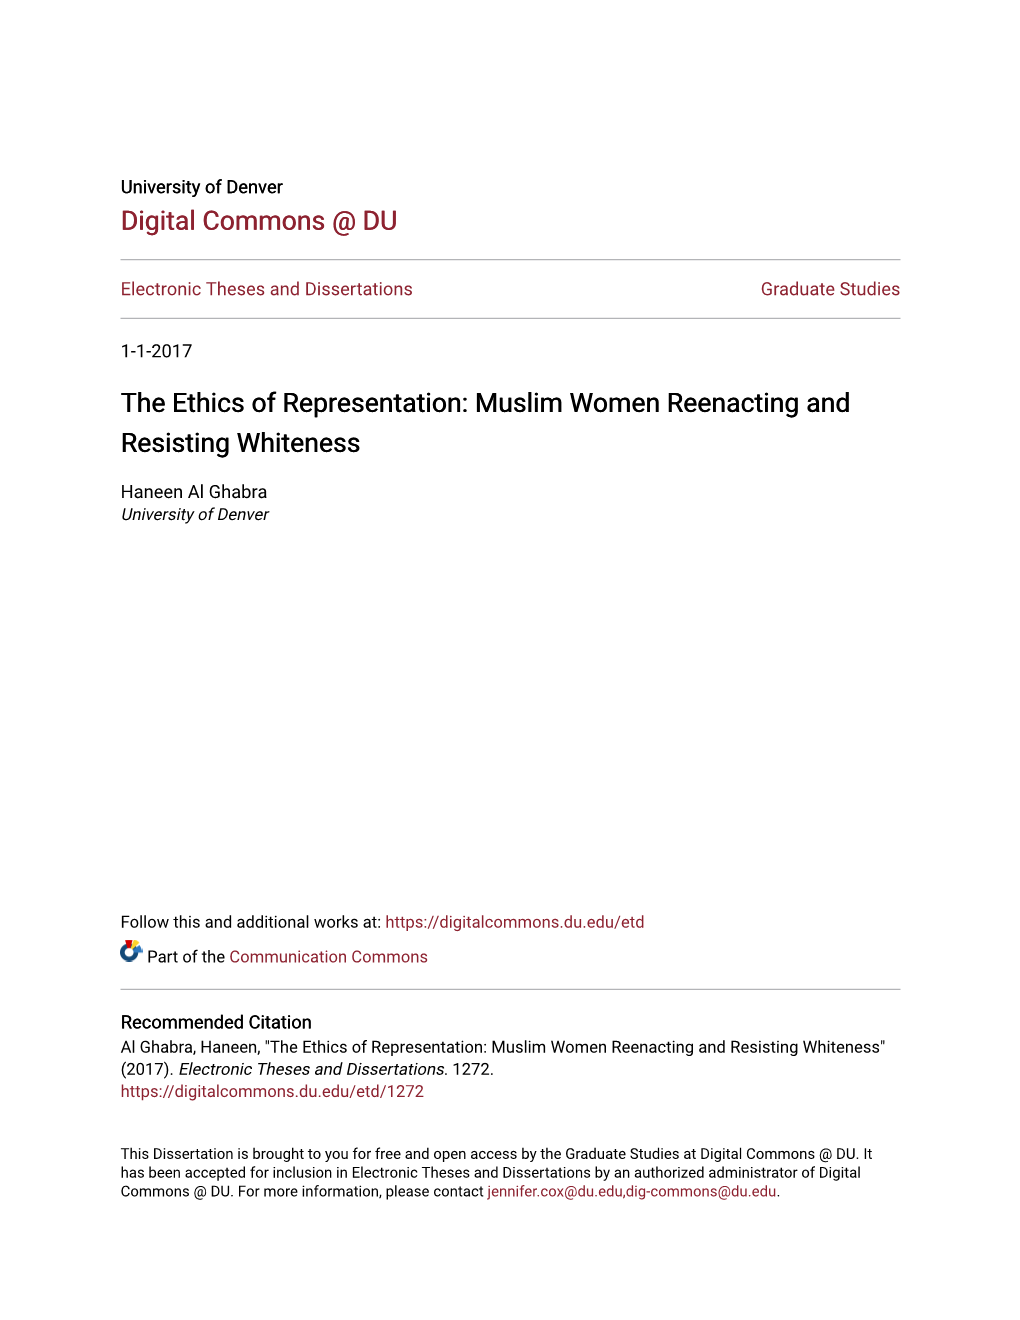 Muslim Women Reenacting and Resisting Whiteness